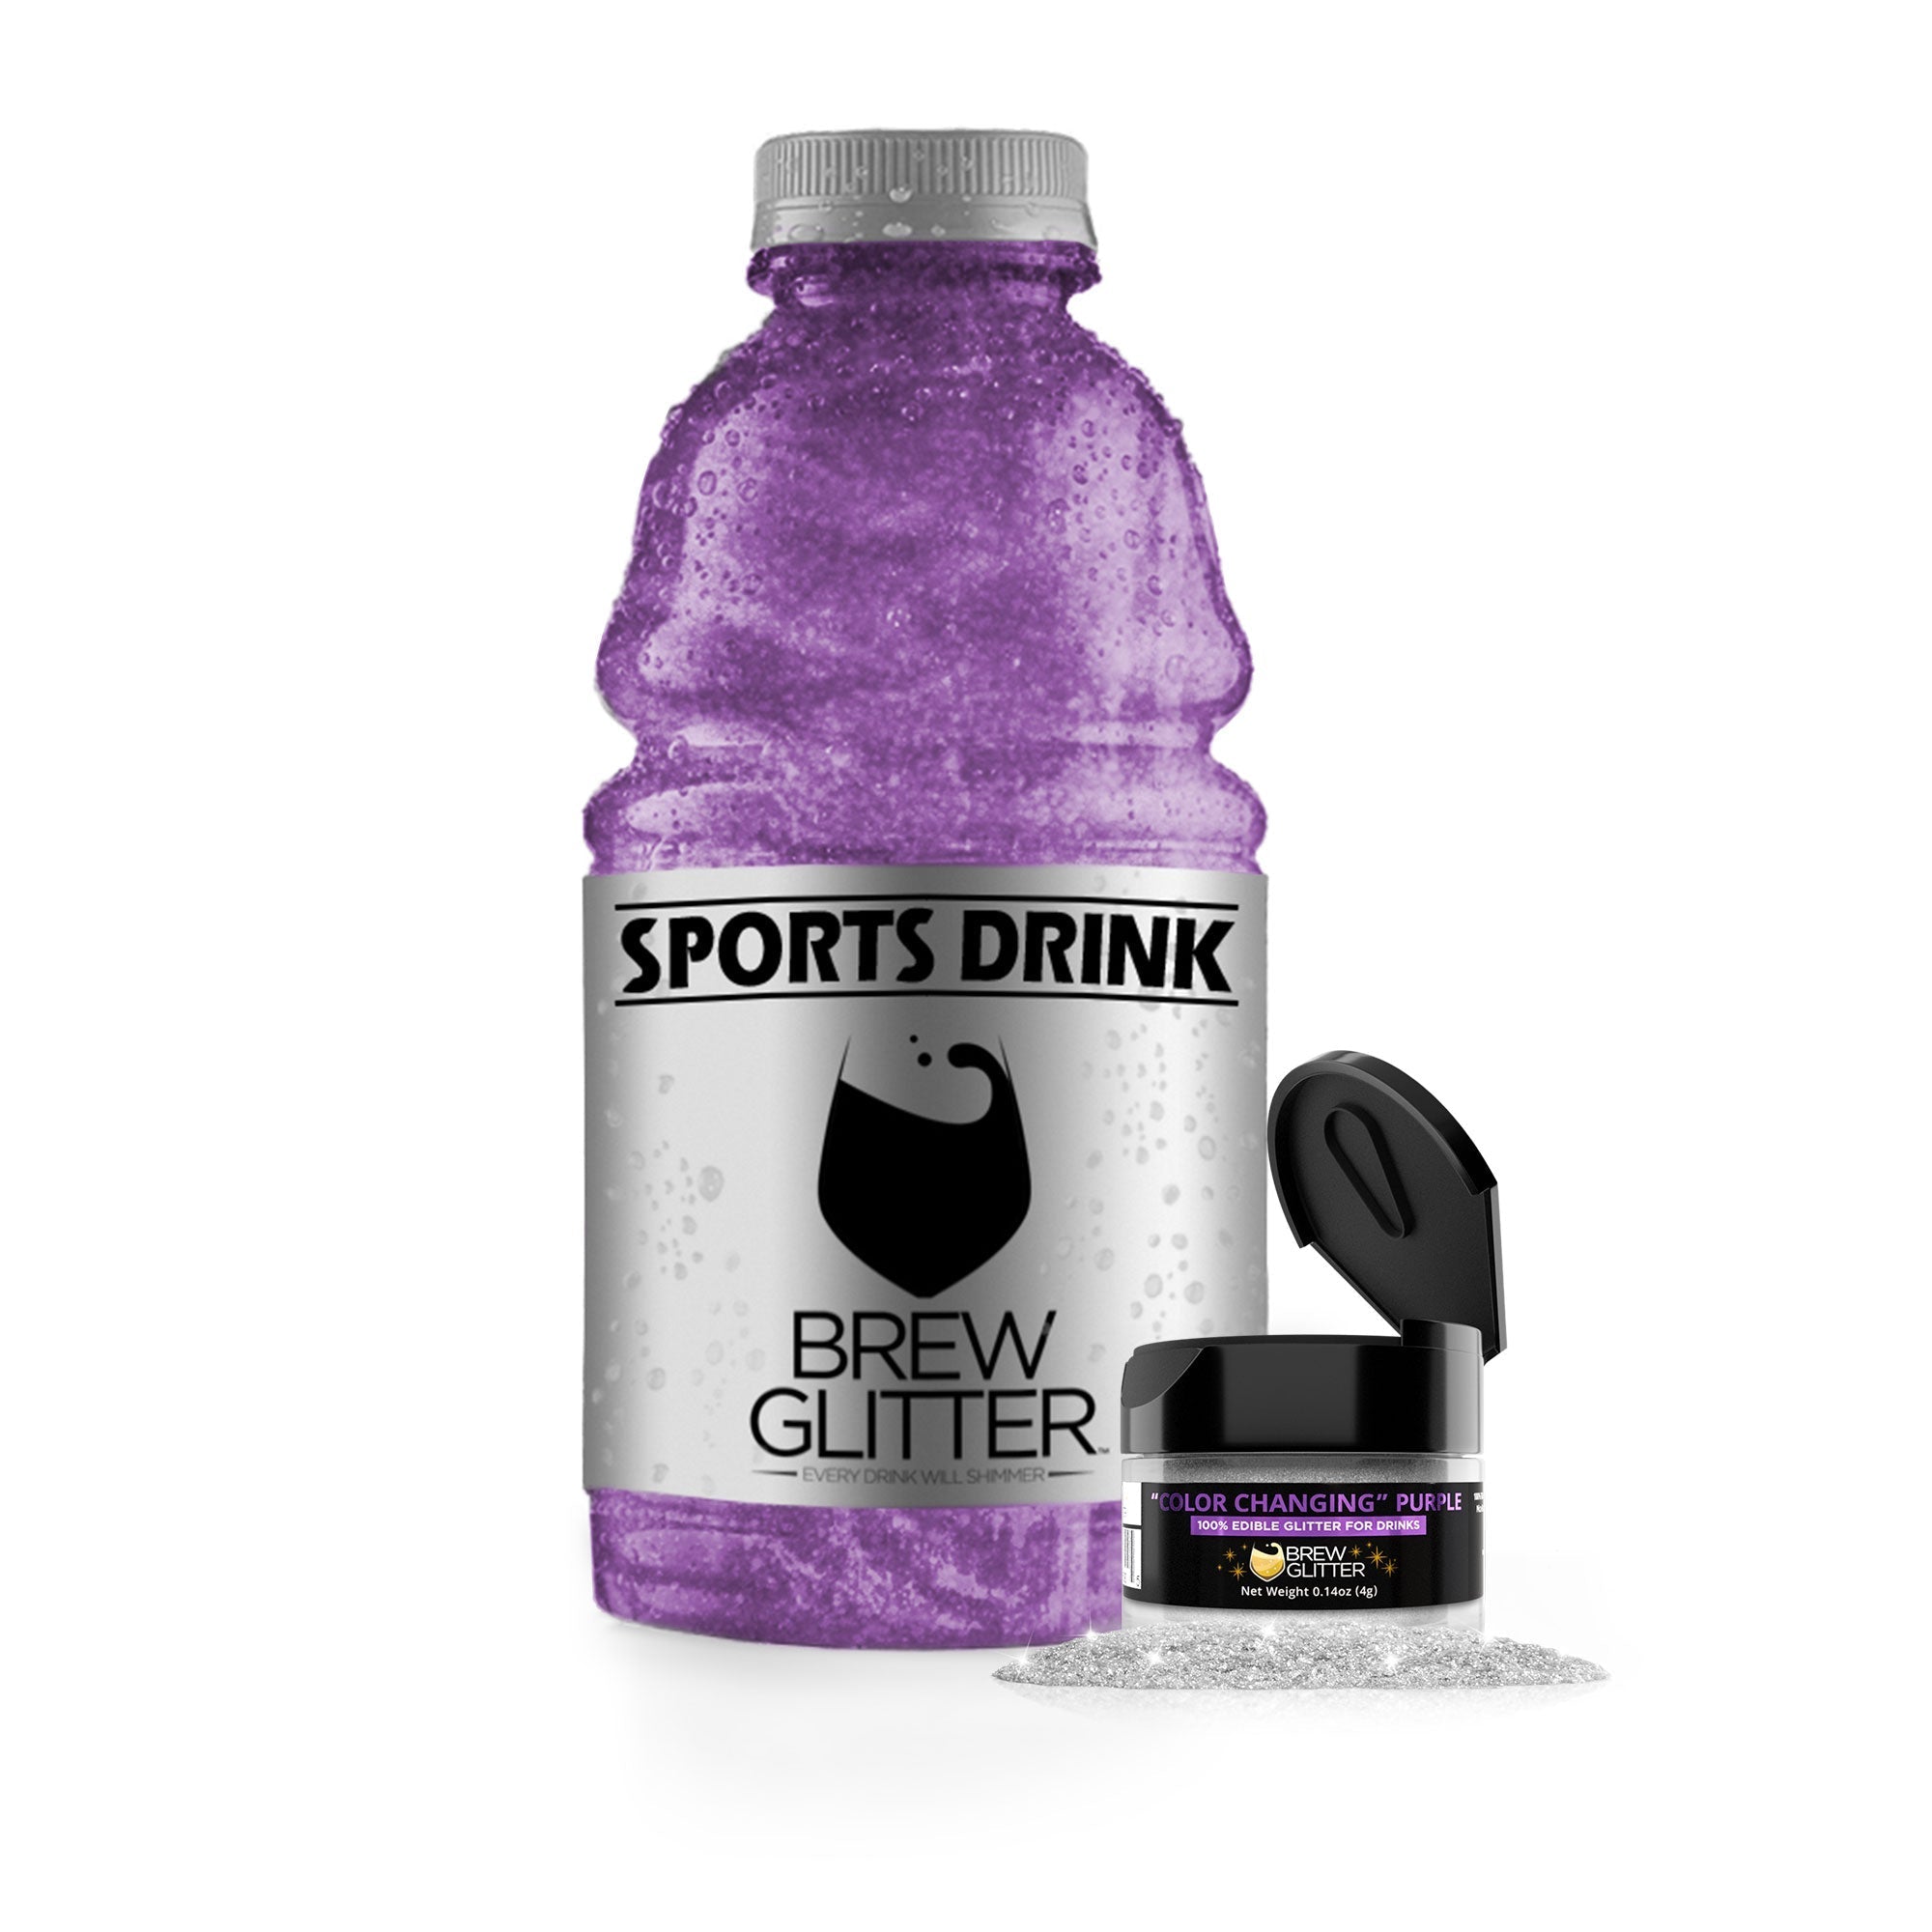  BAKELL® Deep Purple Edible Glitter Spray Pump, (25g), TINKER  DUST Edible Glitter, KOSHER Certified, 100% Edible Glitter